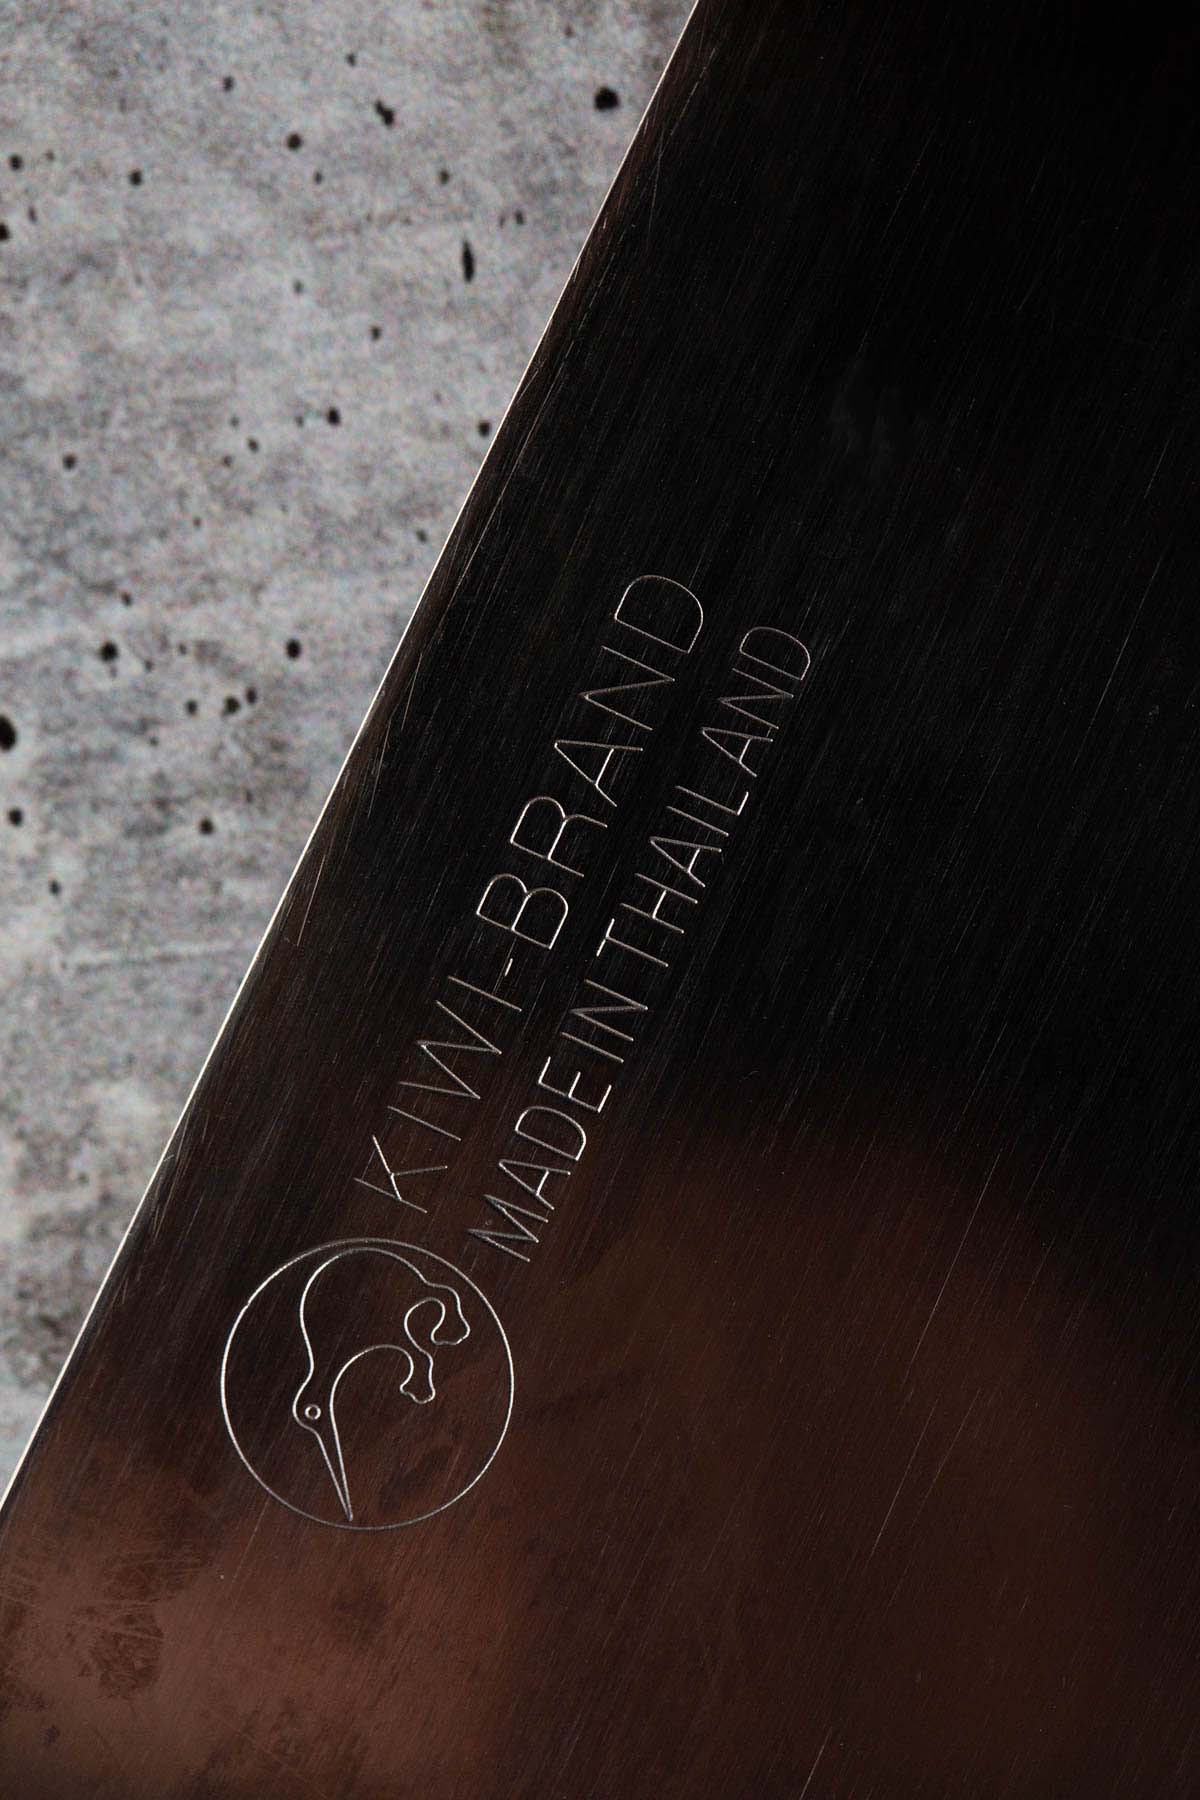 Kiwi knife inscription on blade